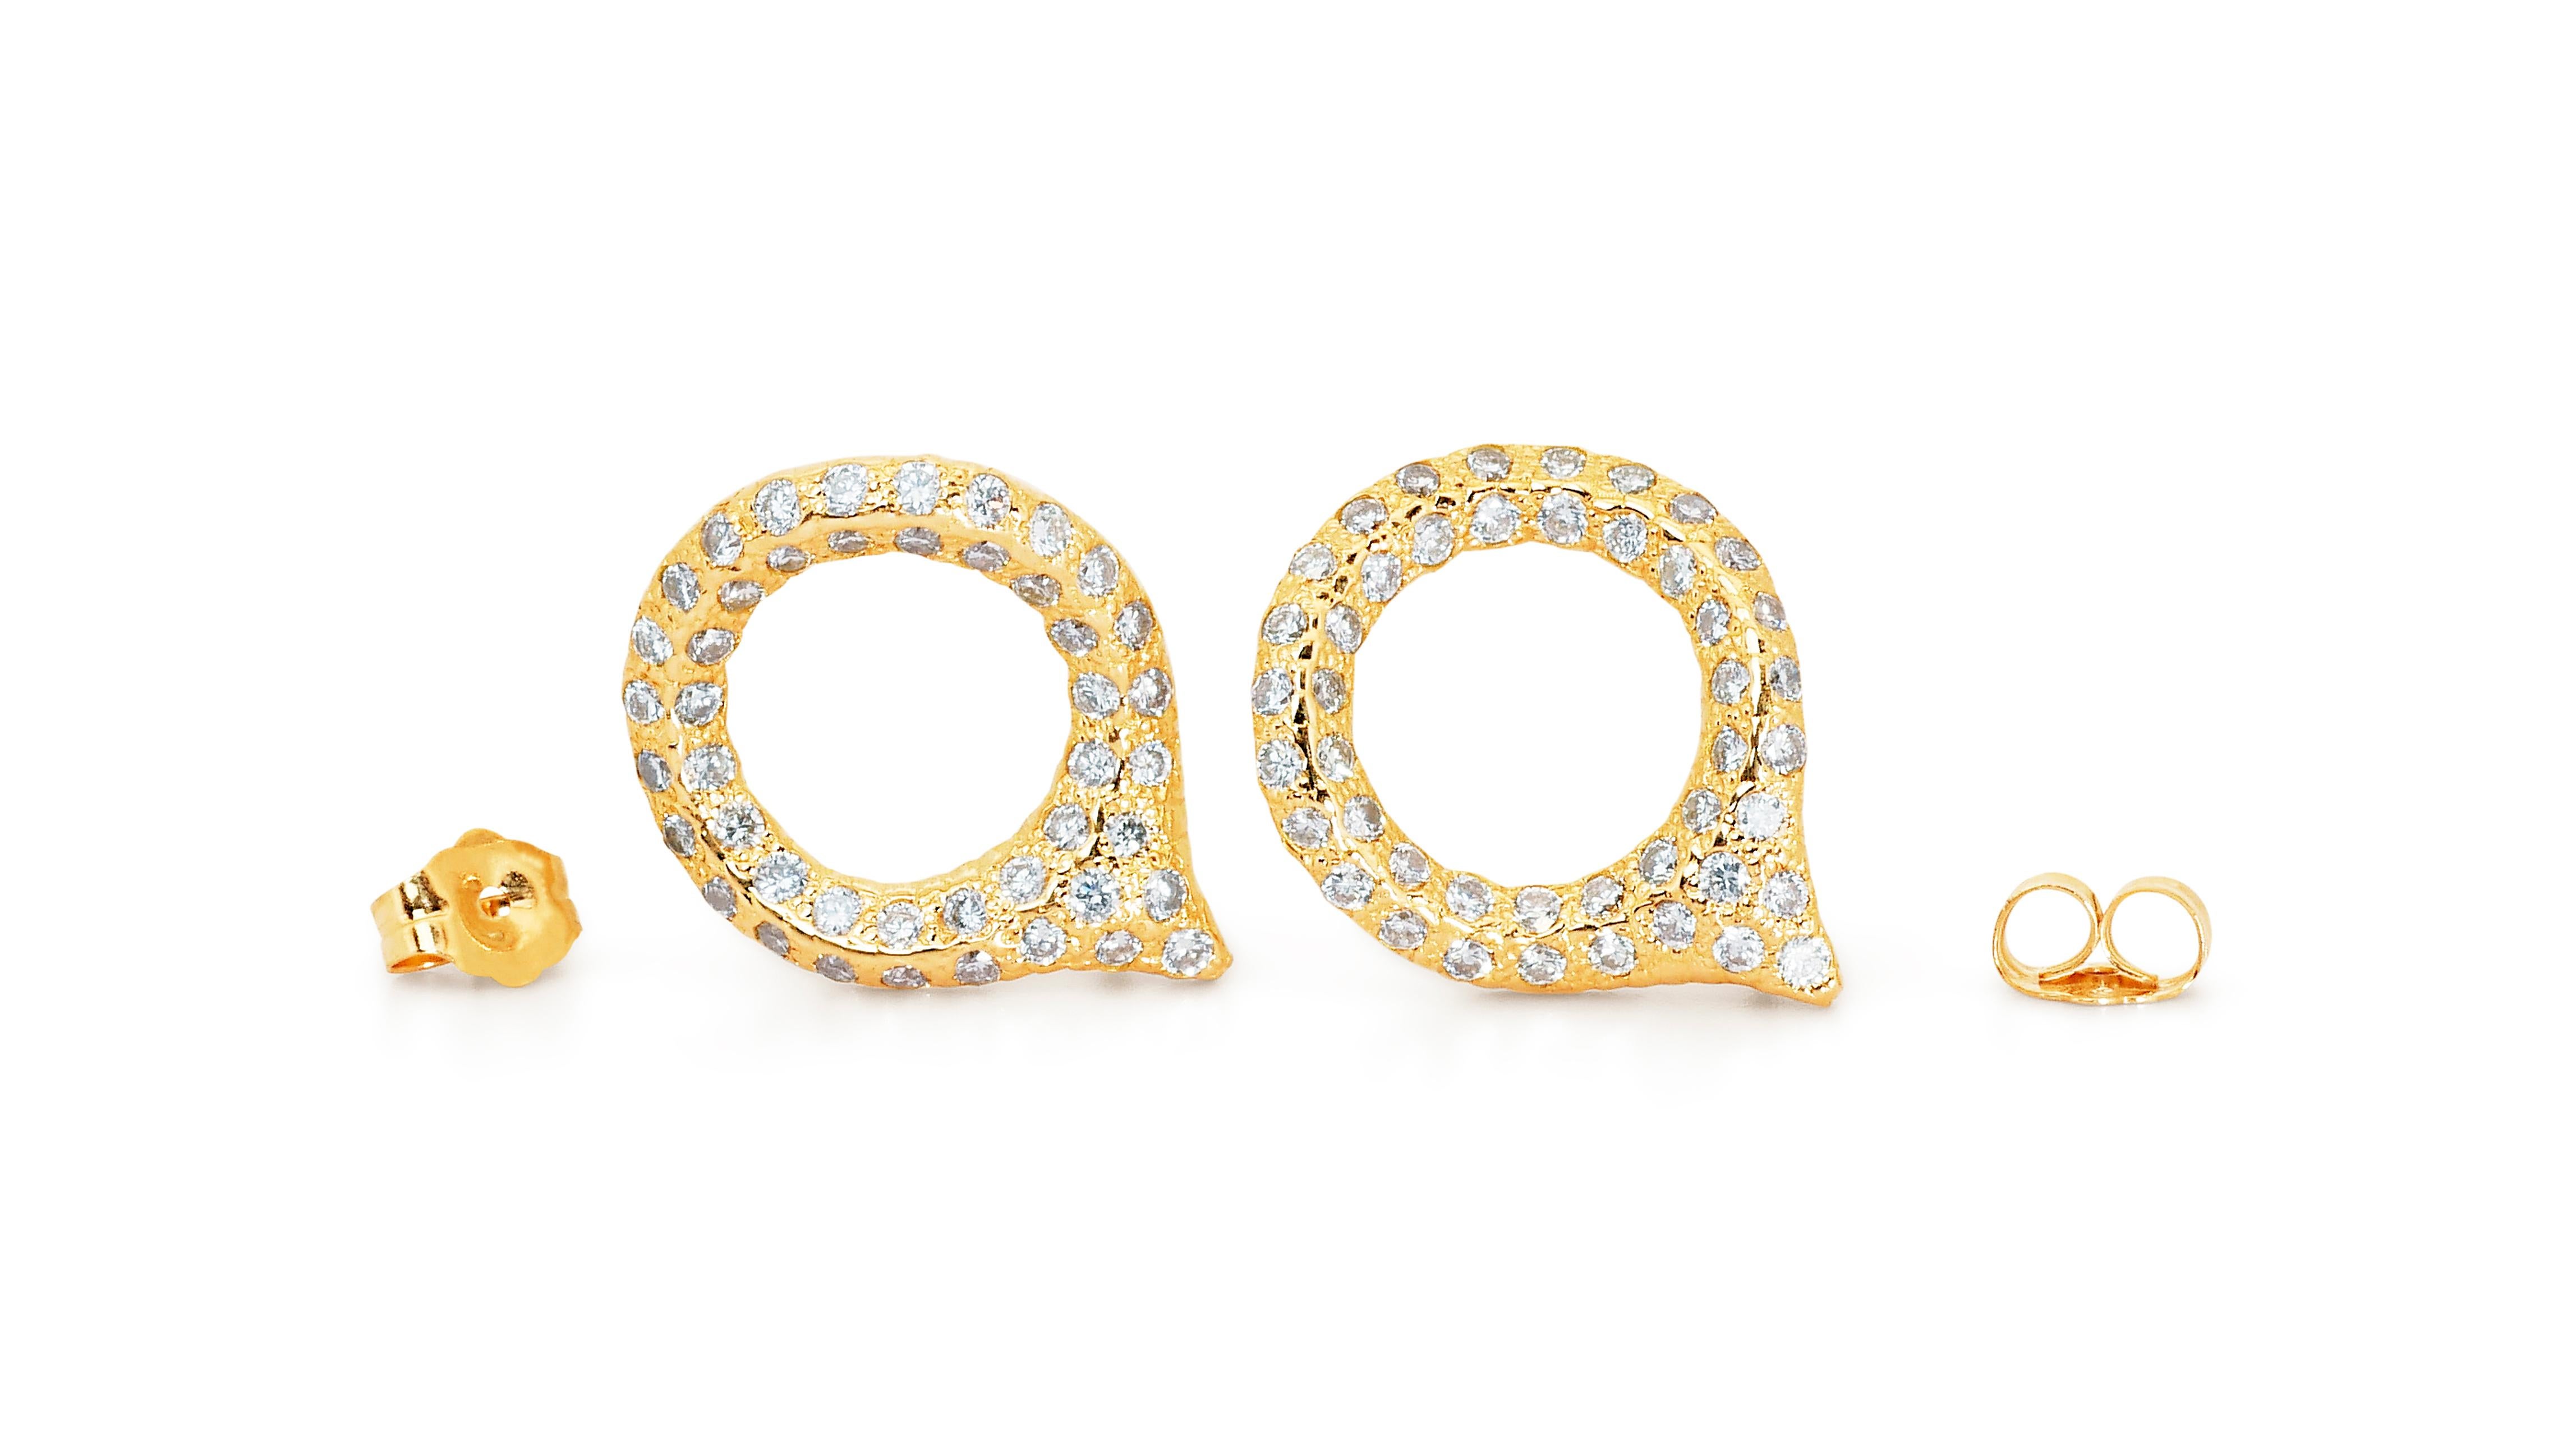 Glamorous 18k Yellow Gold Earrings w/ 1.28ct Natural Diamonds IGI Certificate For Sale 3